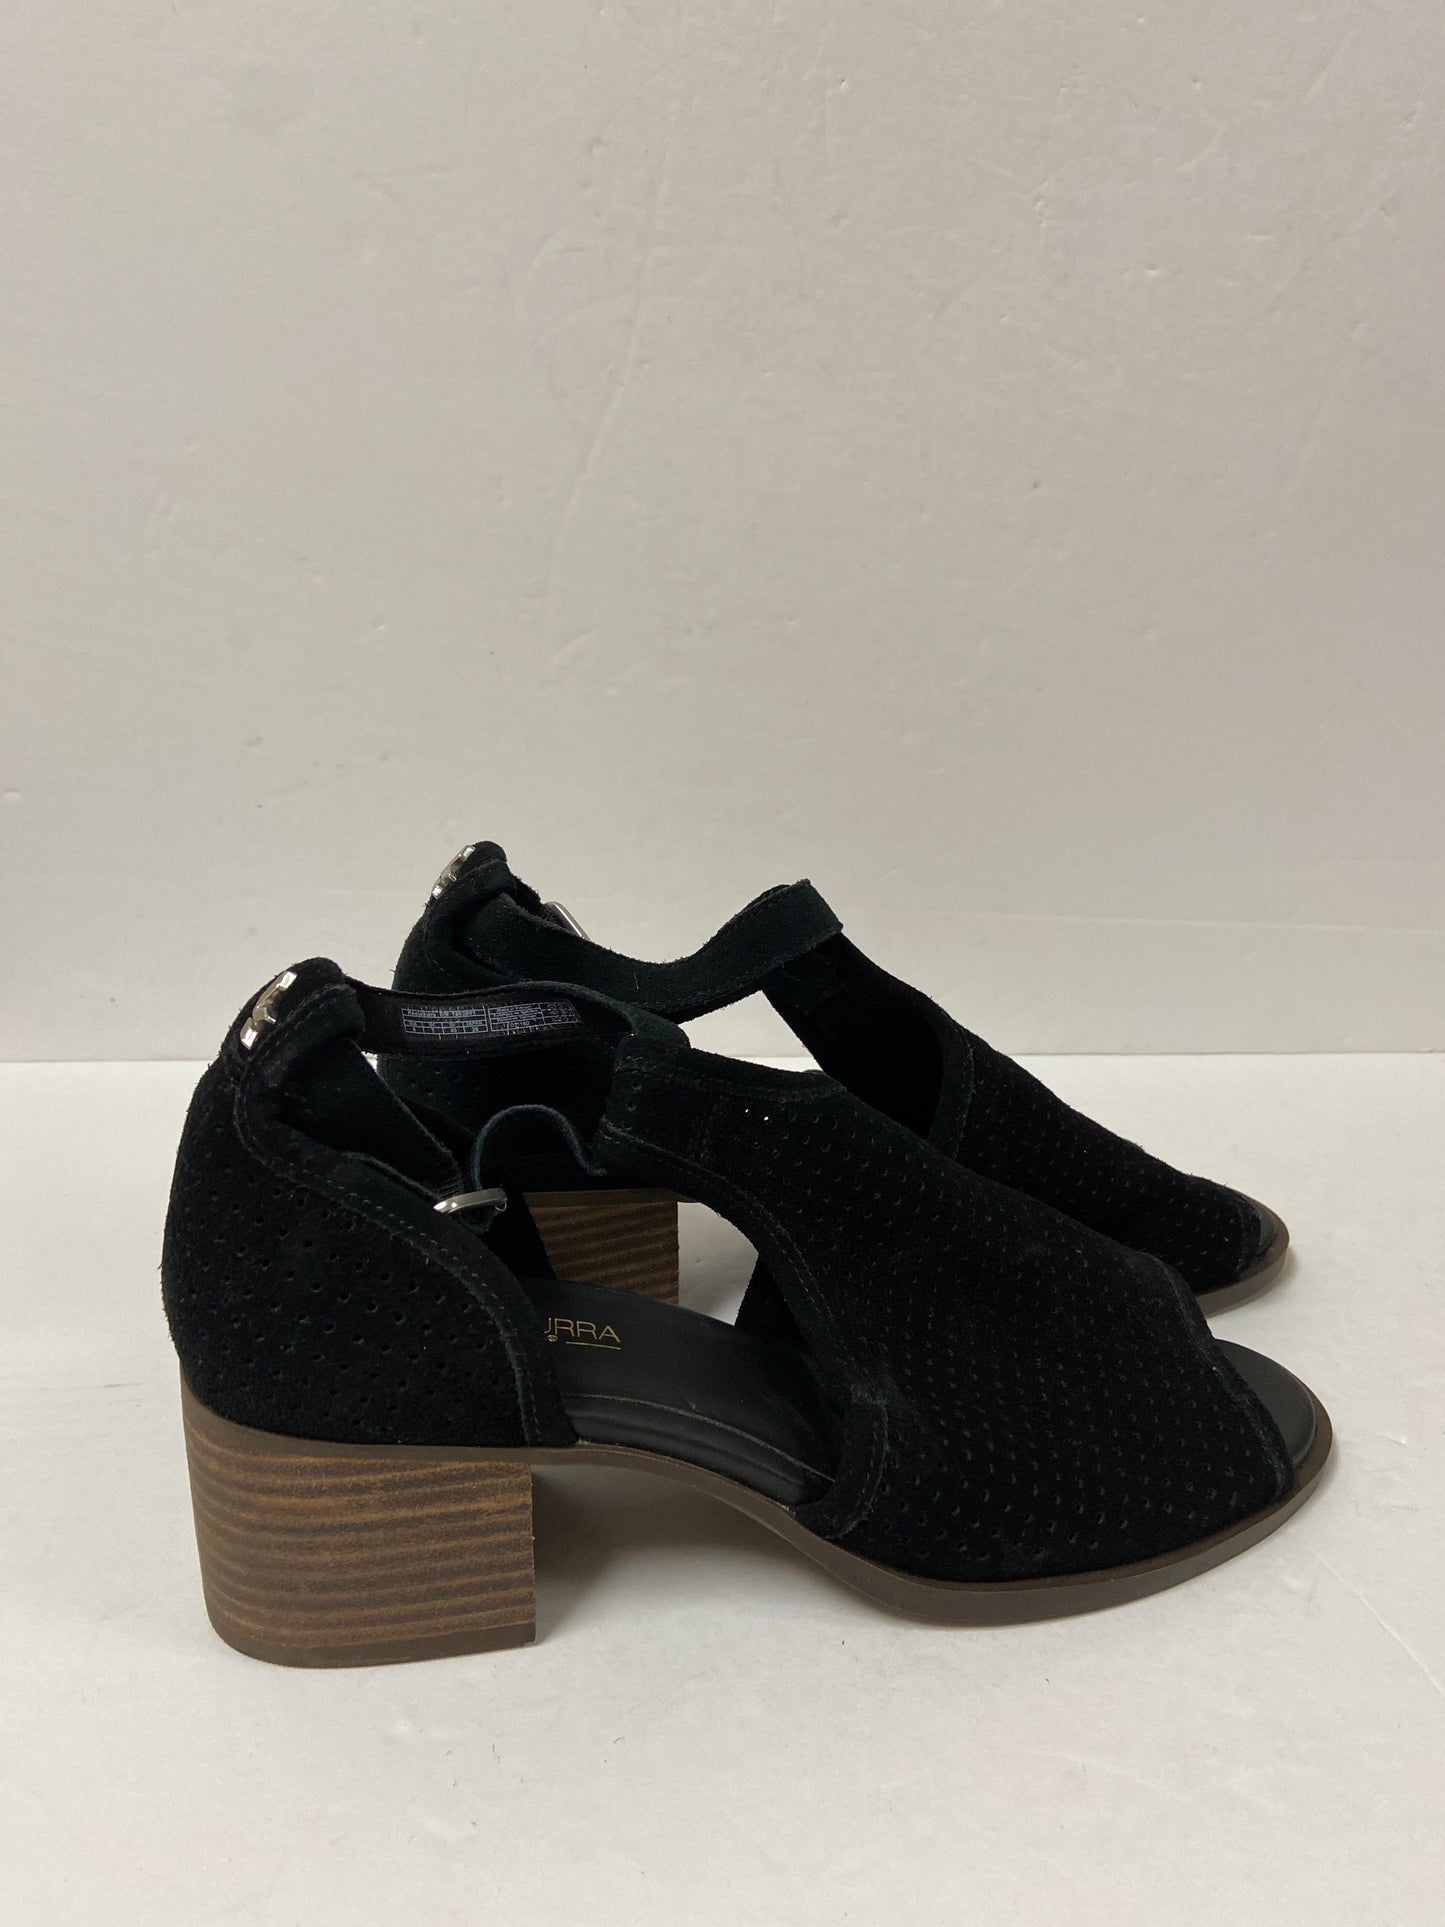 Sandals Heels Block By Koolaburra By Ugg  Size: 9